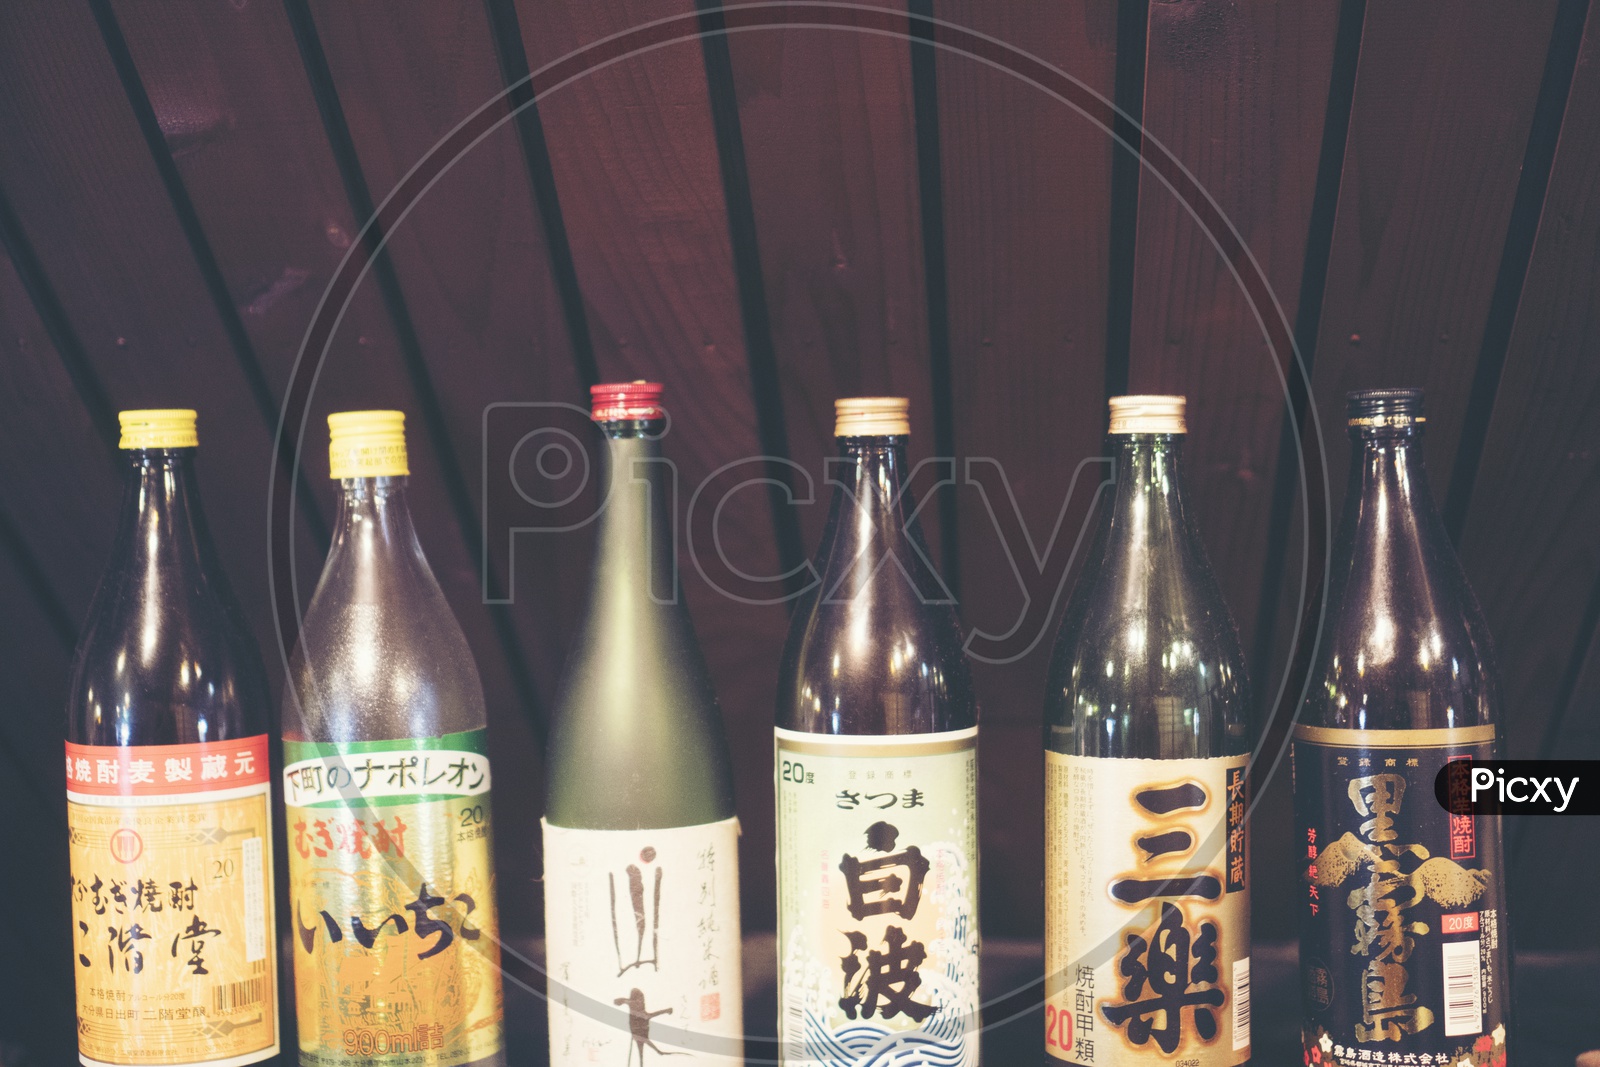 Sake Bottles on display in a Japanese restaurant, Tokyo